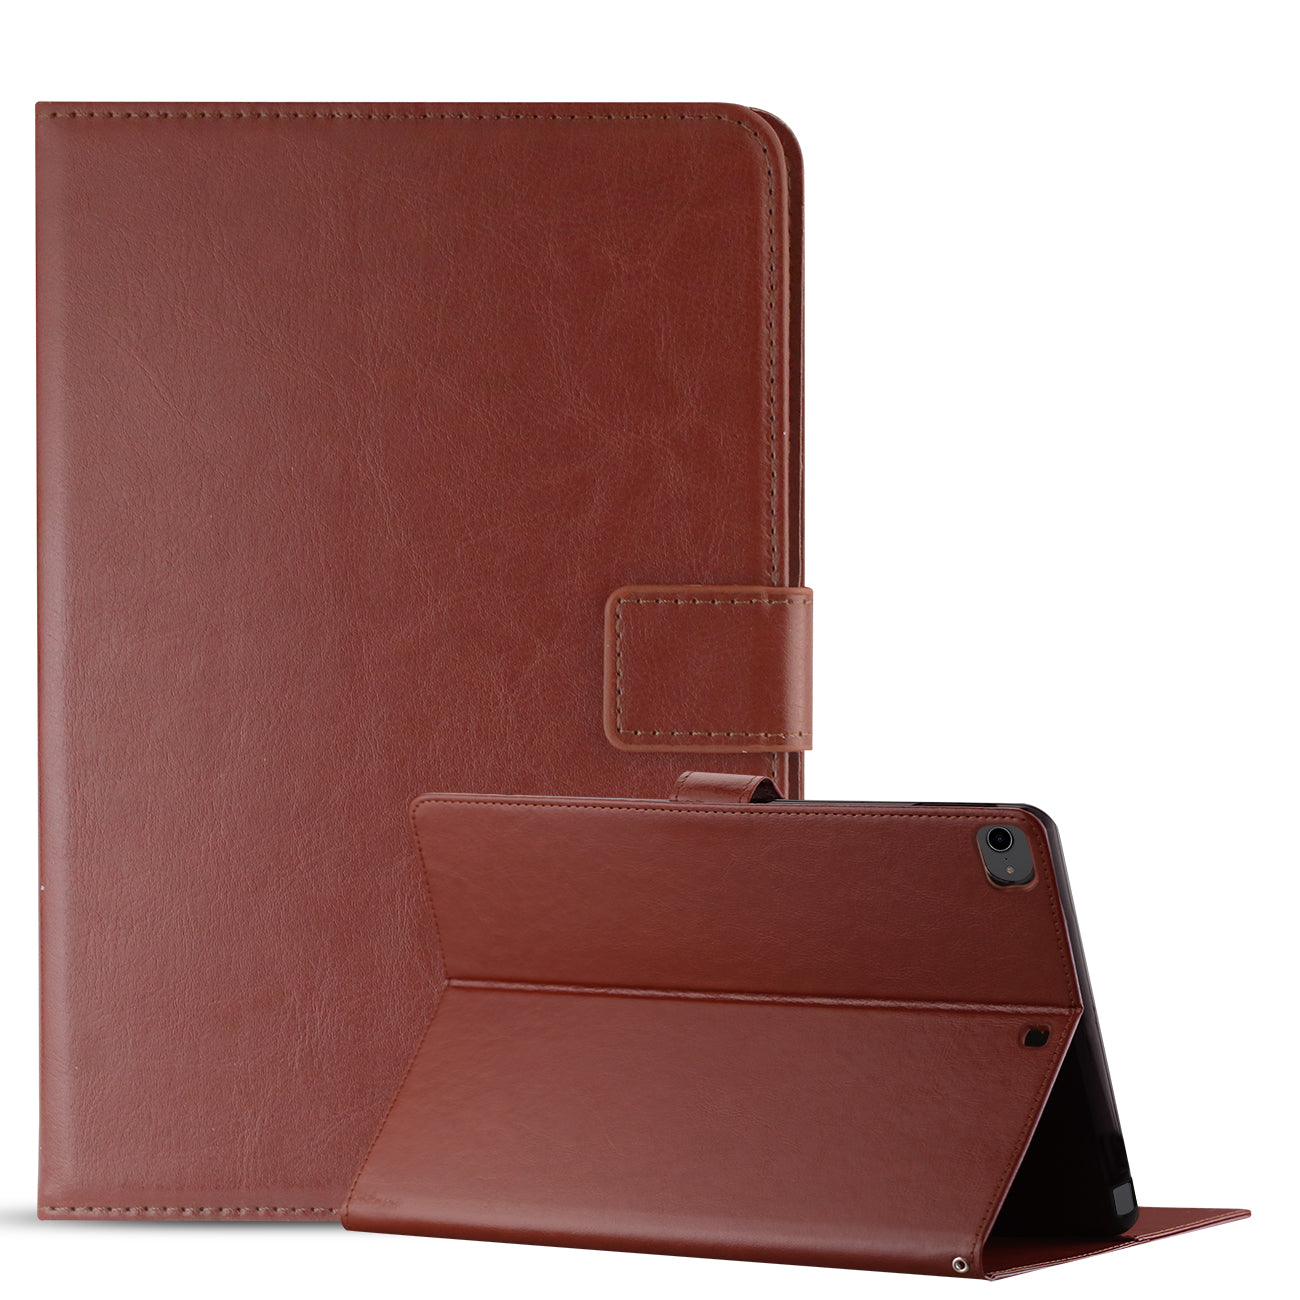 Reiko Leather Folio Cover Protective Case for 8" iPad mini 4/5/6 In Brown